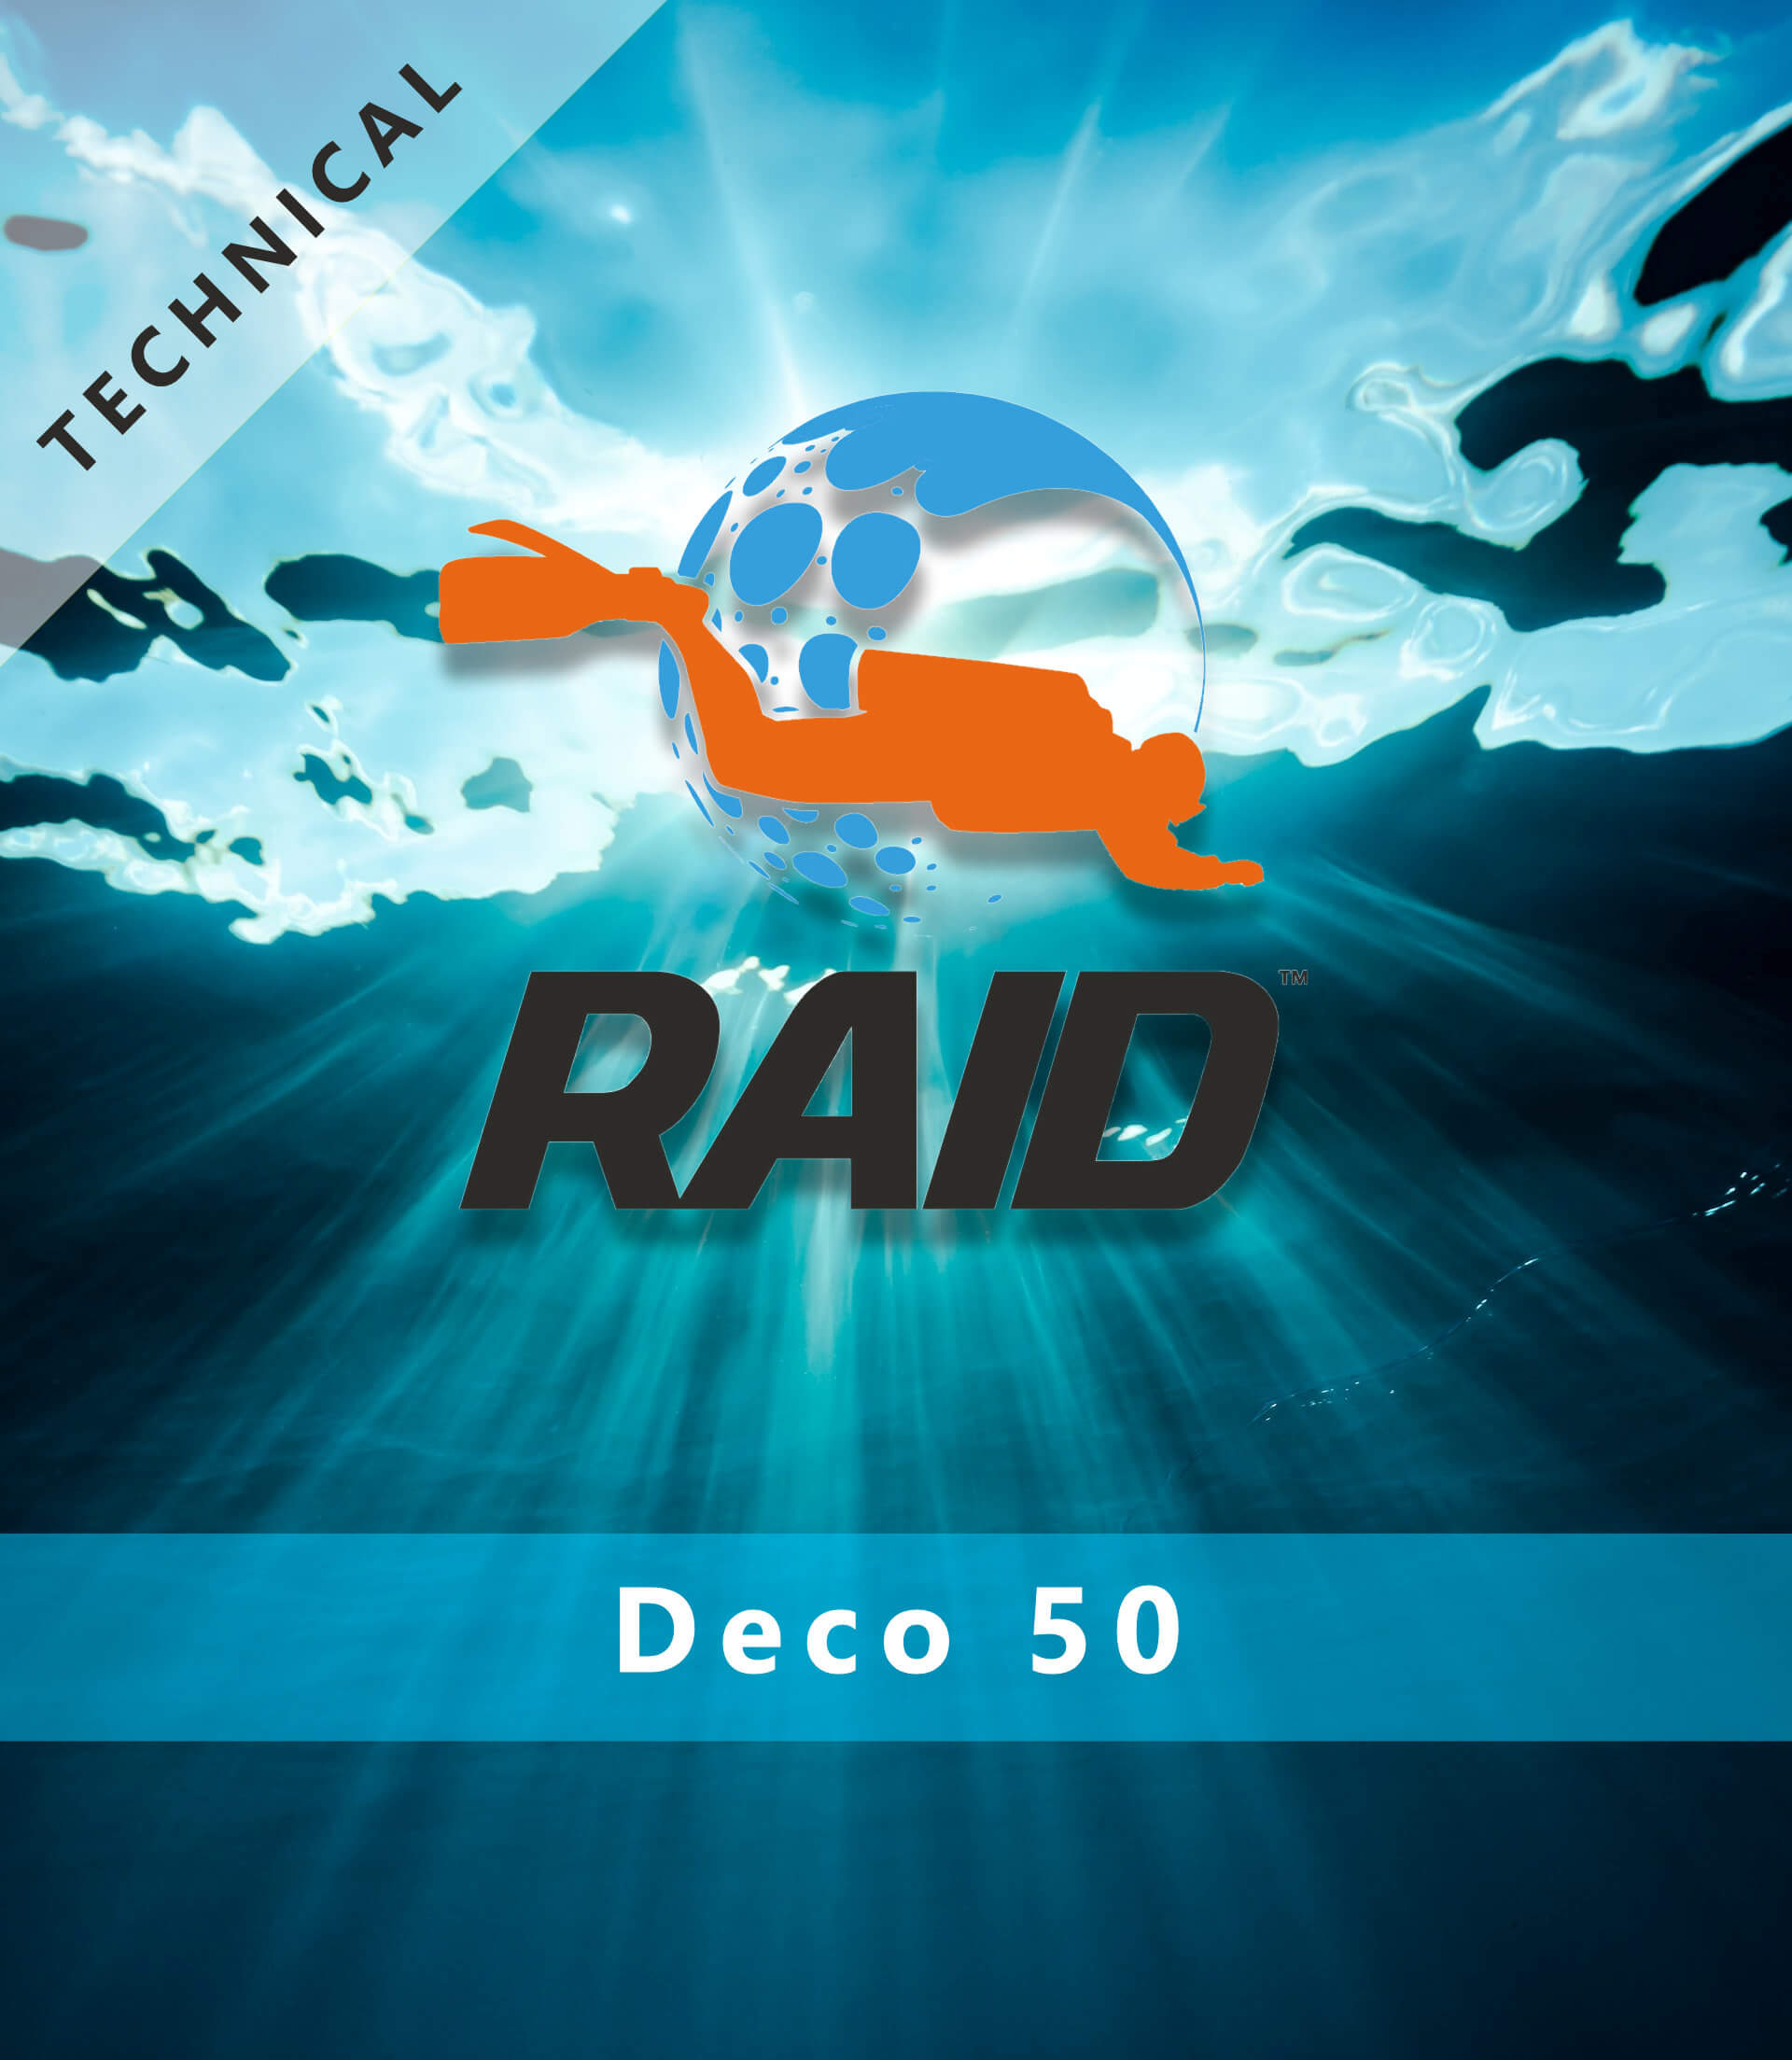 Technical / Deco 50 - RAID International Scuba Diving Course